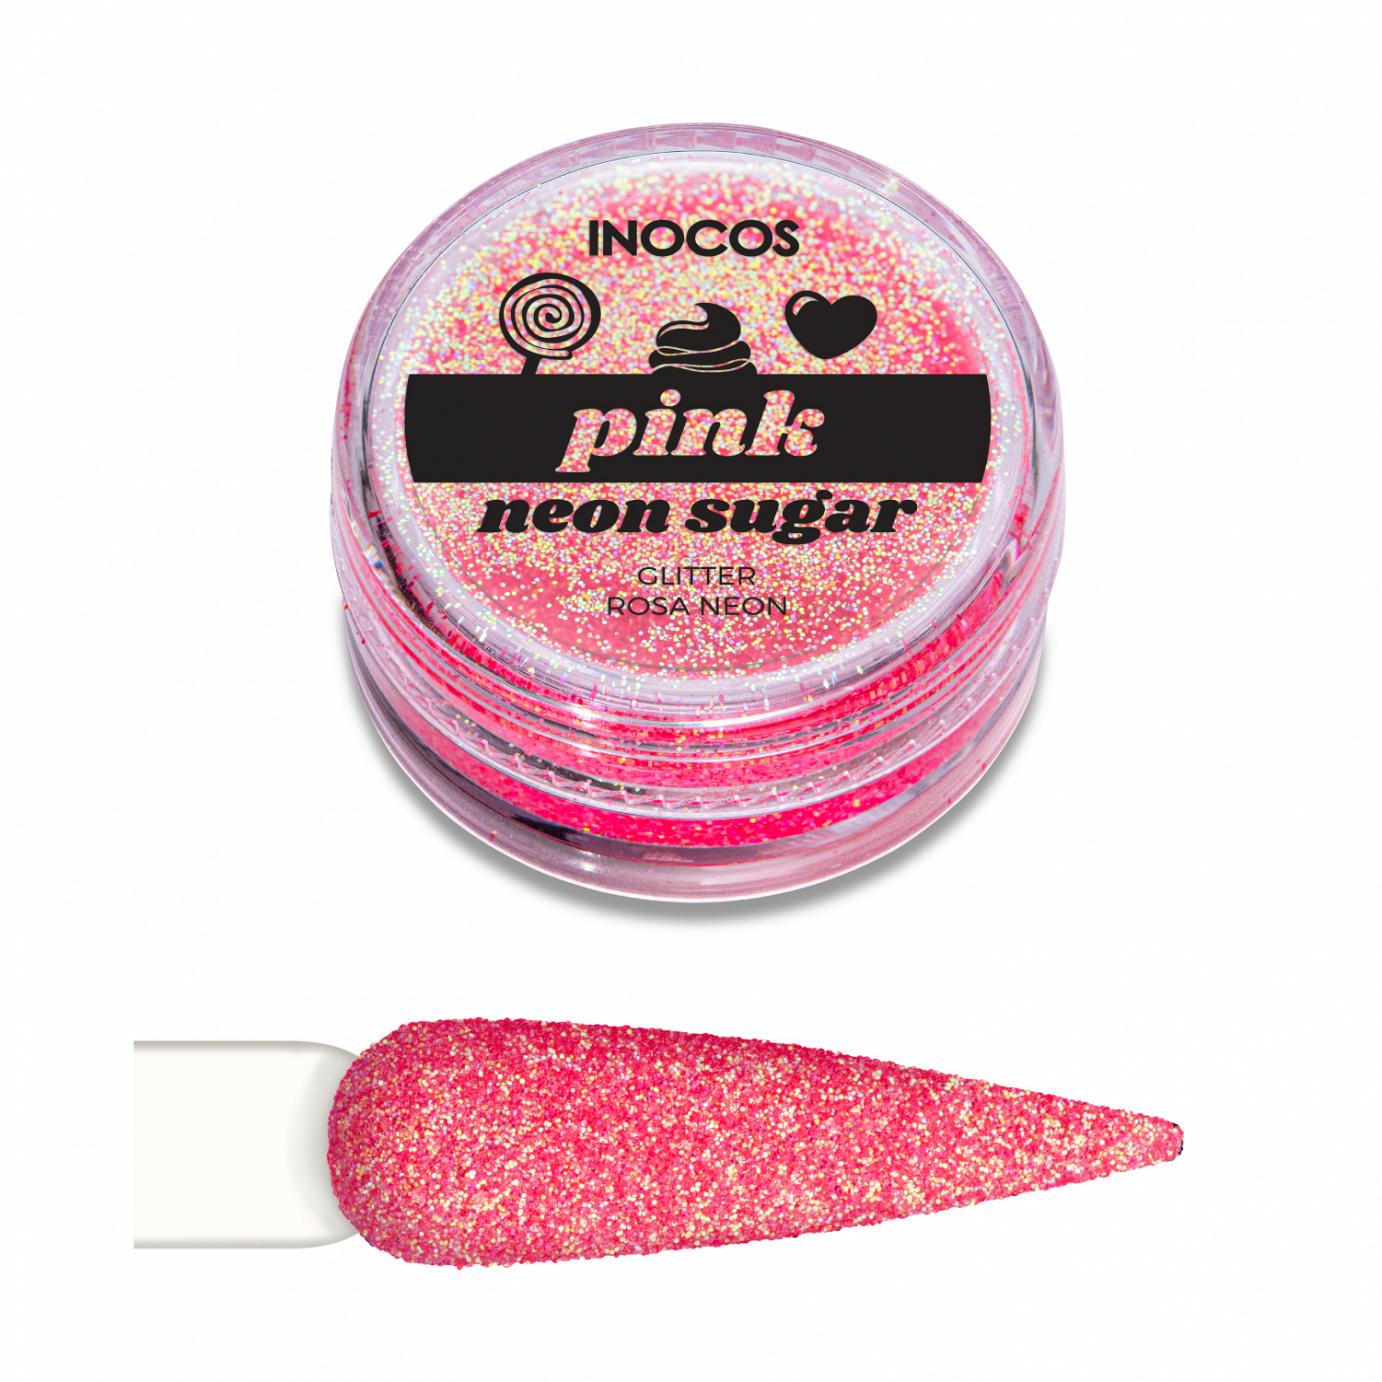 Inocos glitter para unhas pó Neon Sugar pink